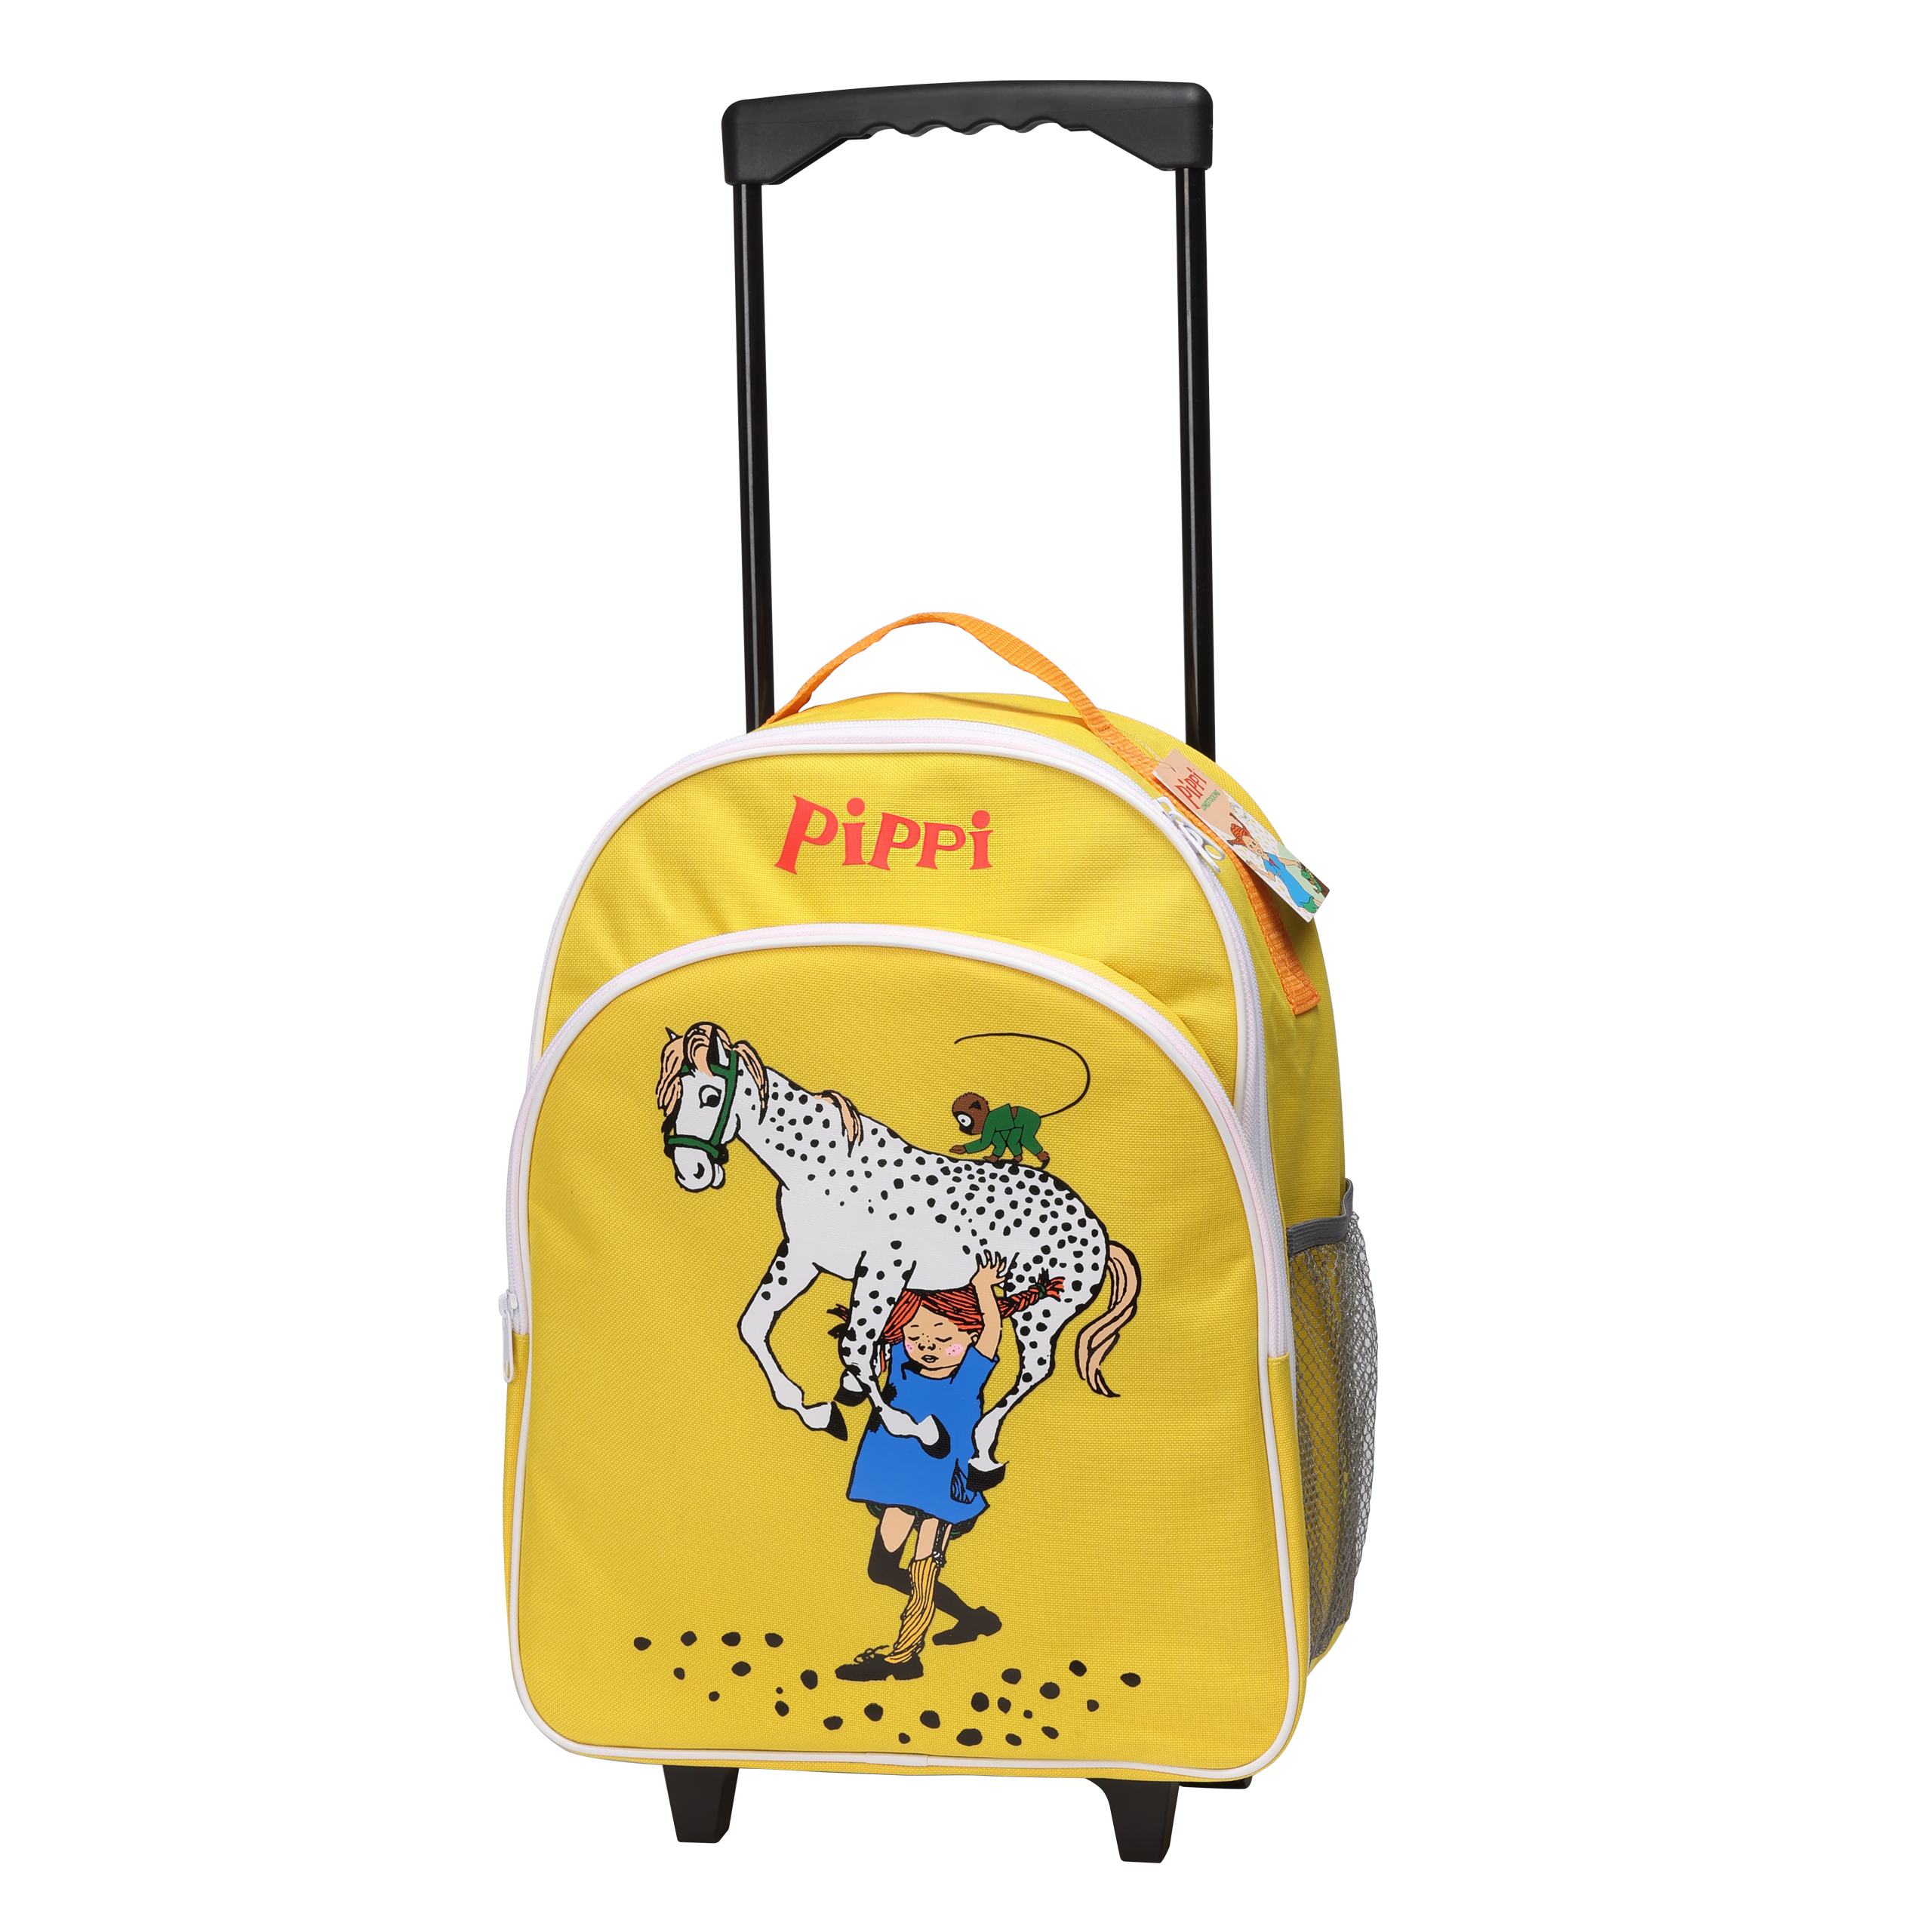 Pippi pippi kids bag travel bag yellow